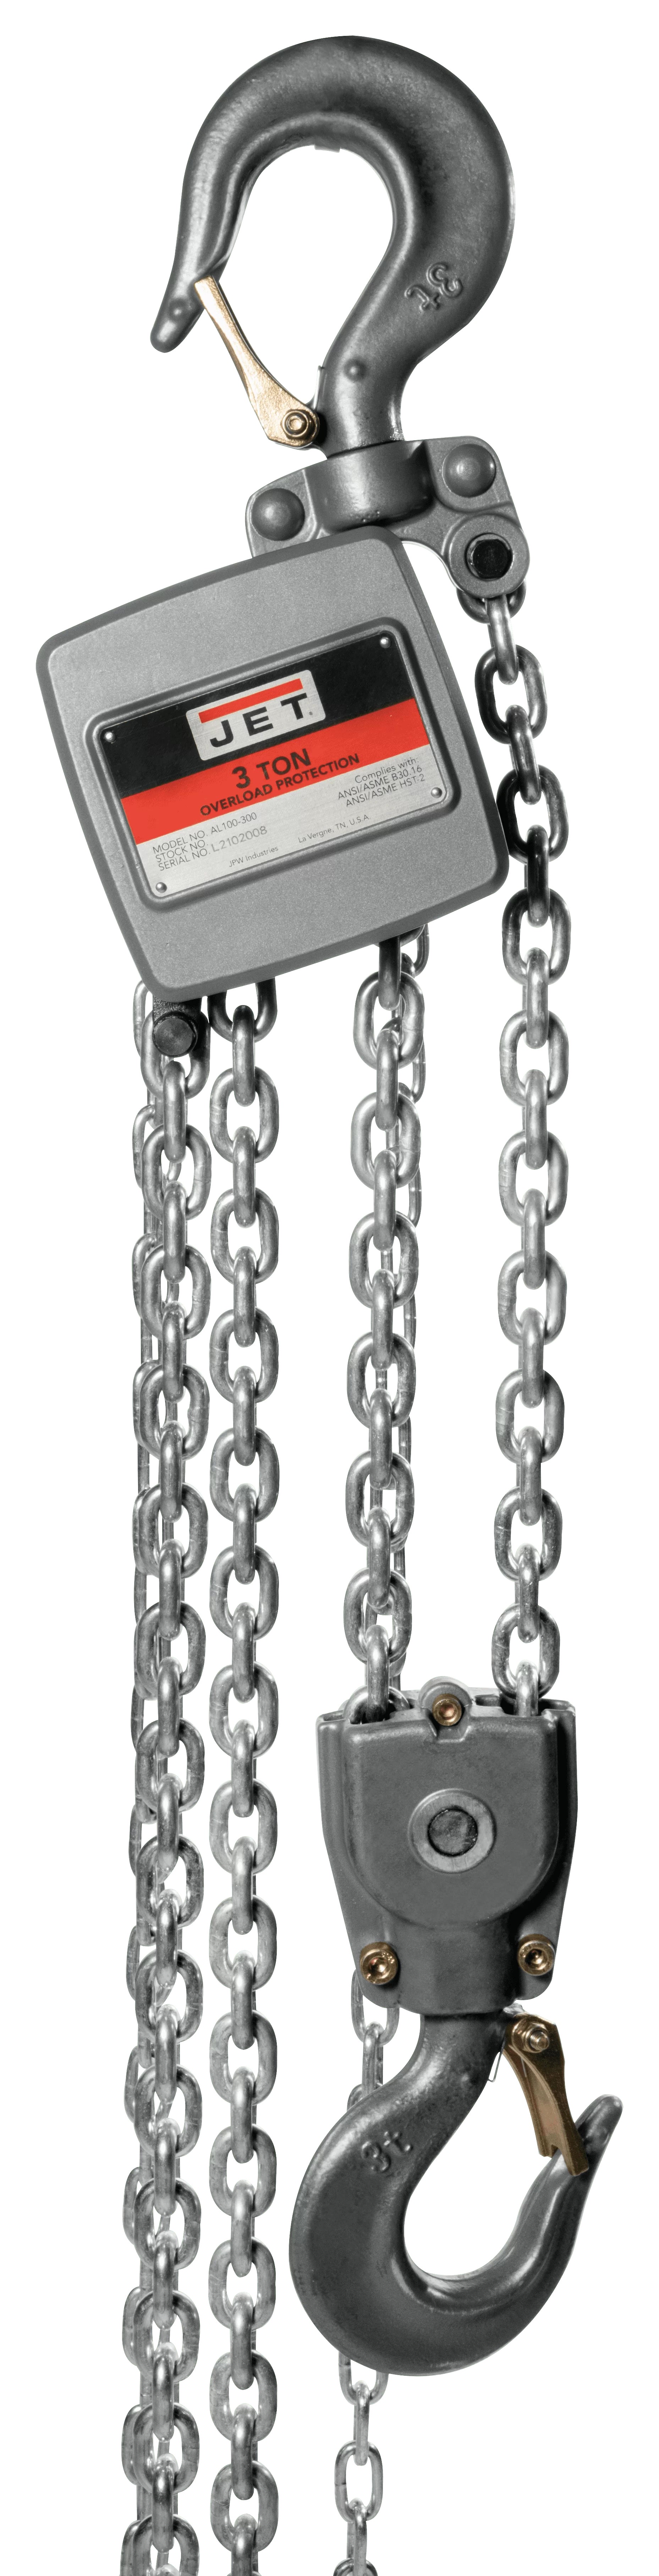 AL100-300-15 3 Ton Aluminum Hand Chain Hoist with 15ft of Lift